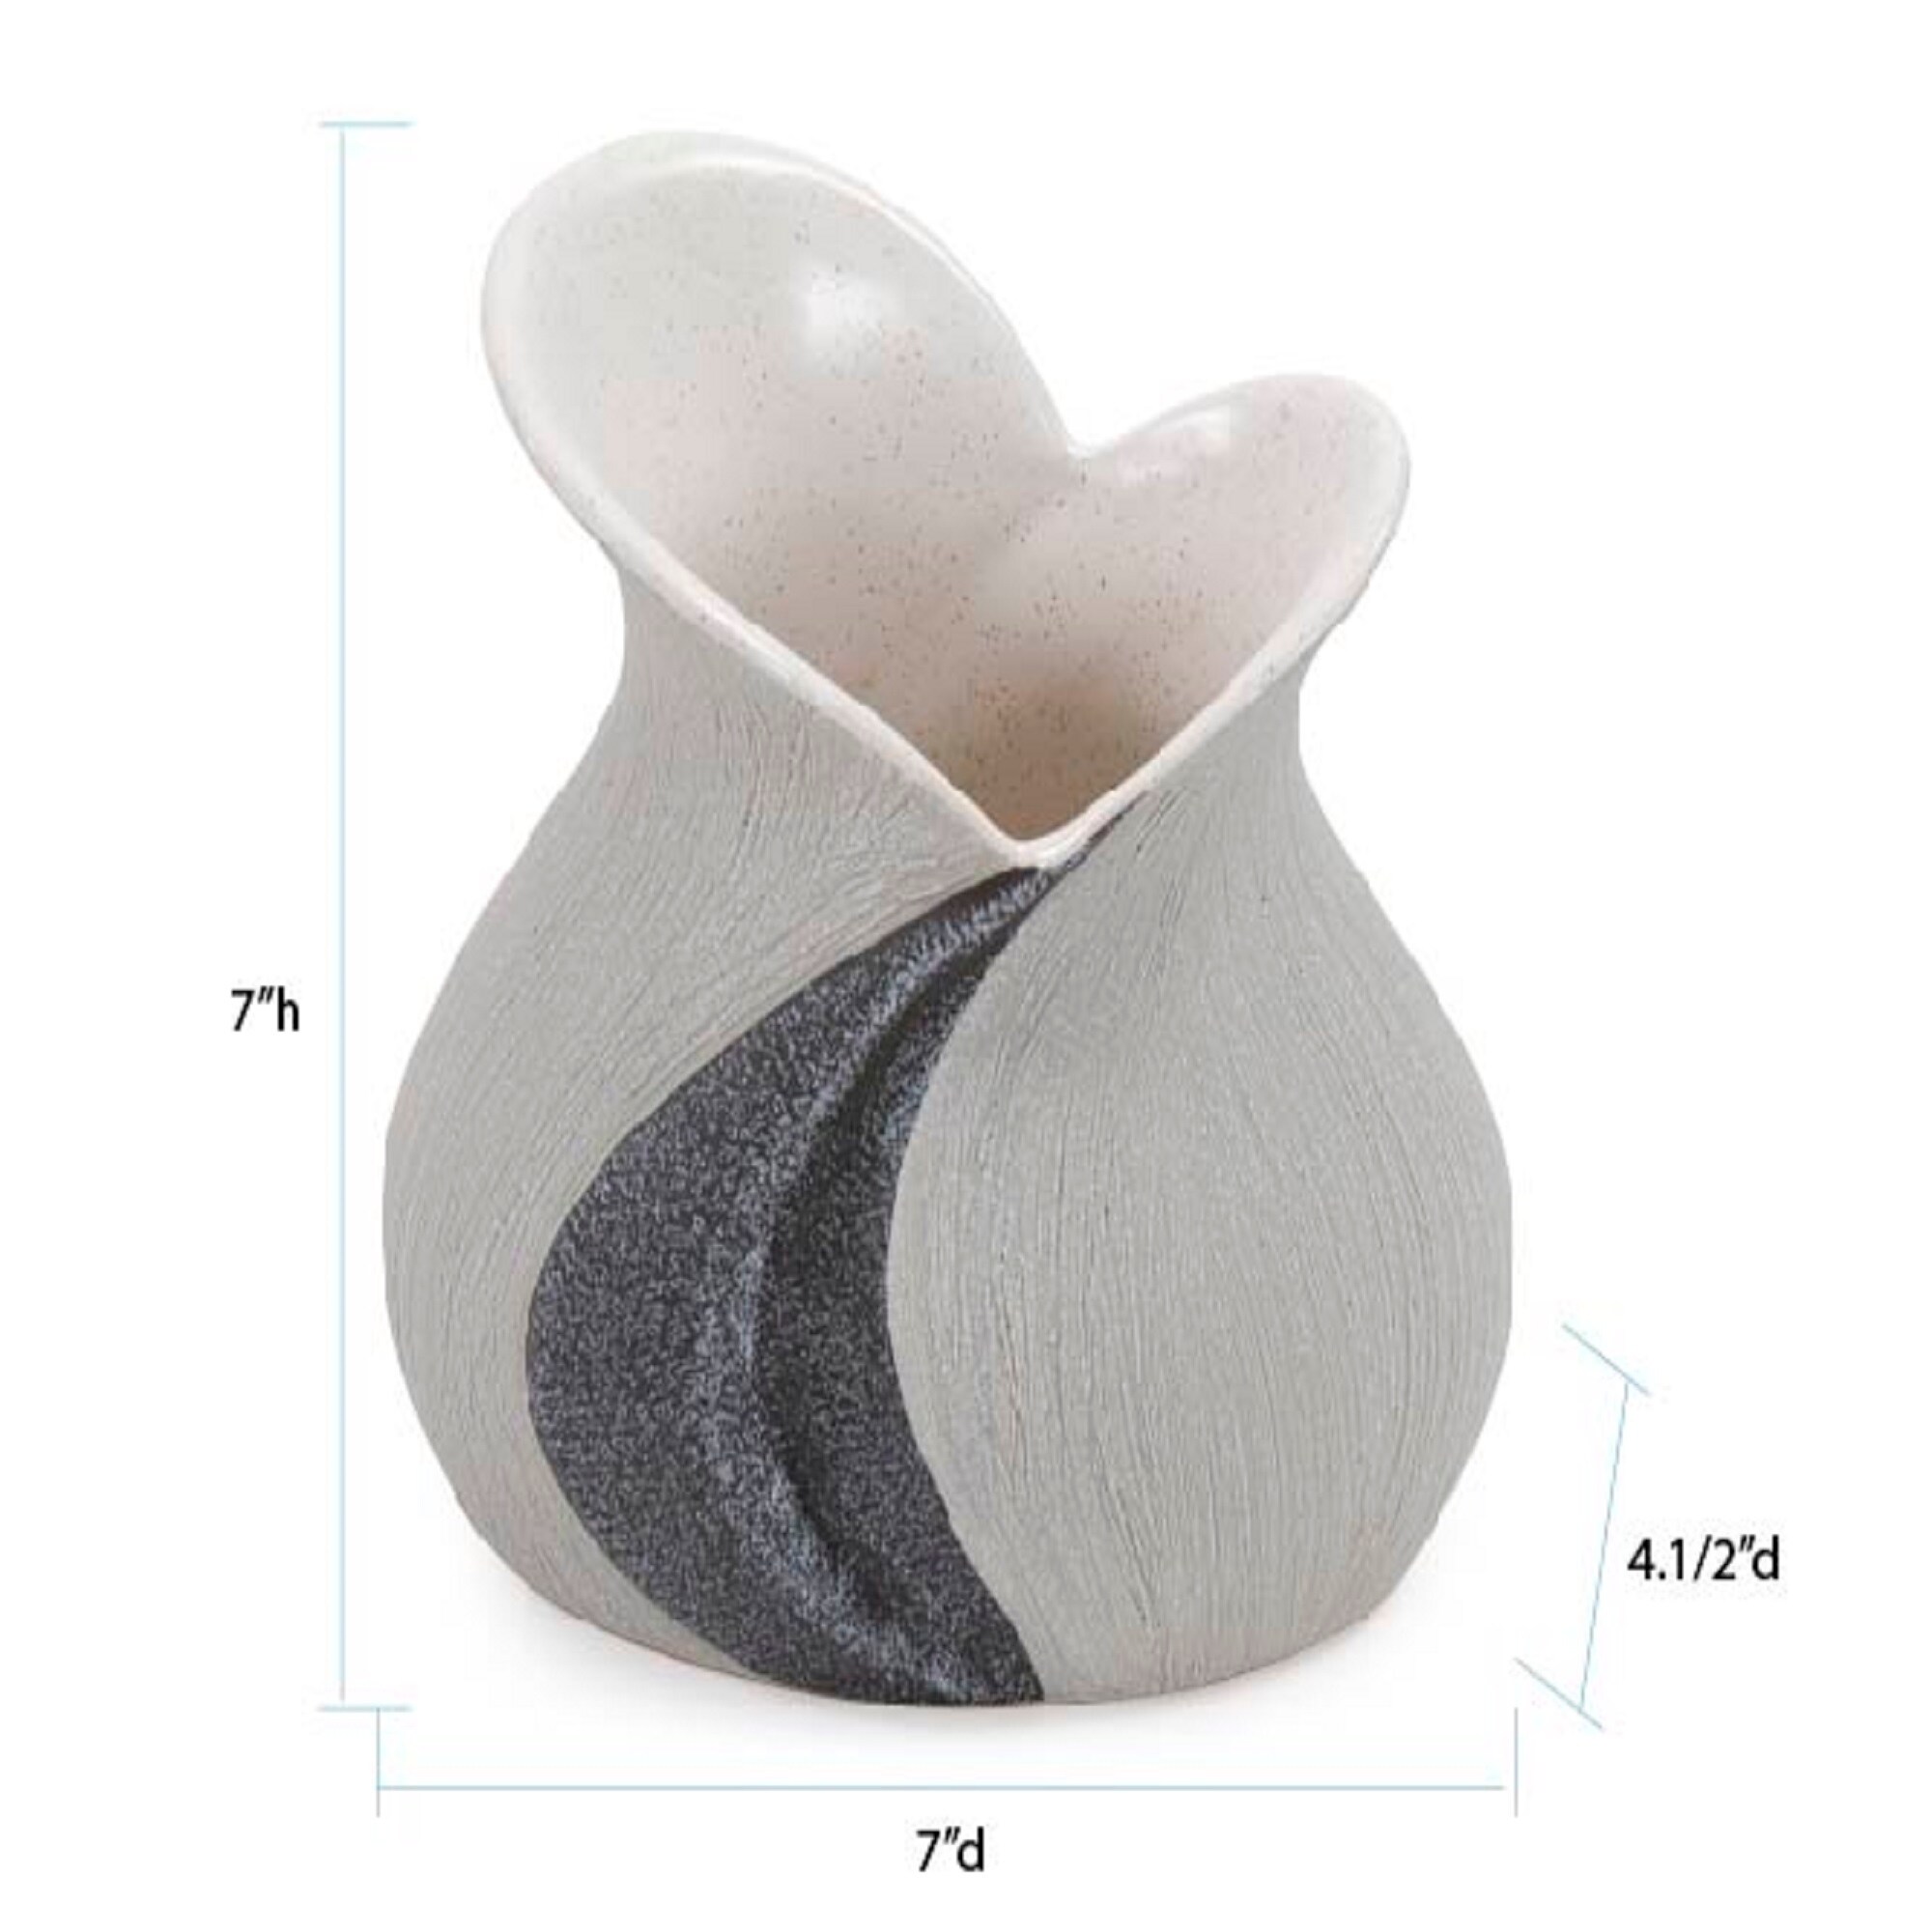 Allan Andrews Gray Two Toned Decorative Ceramic Vase - 7H x 7W x 4D